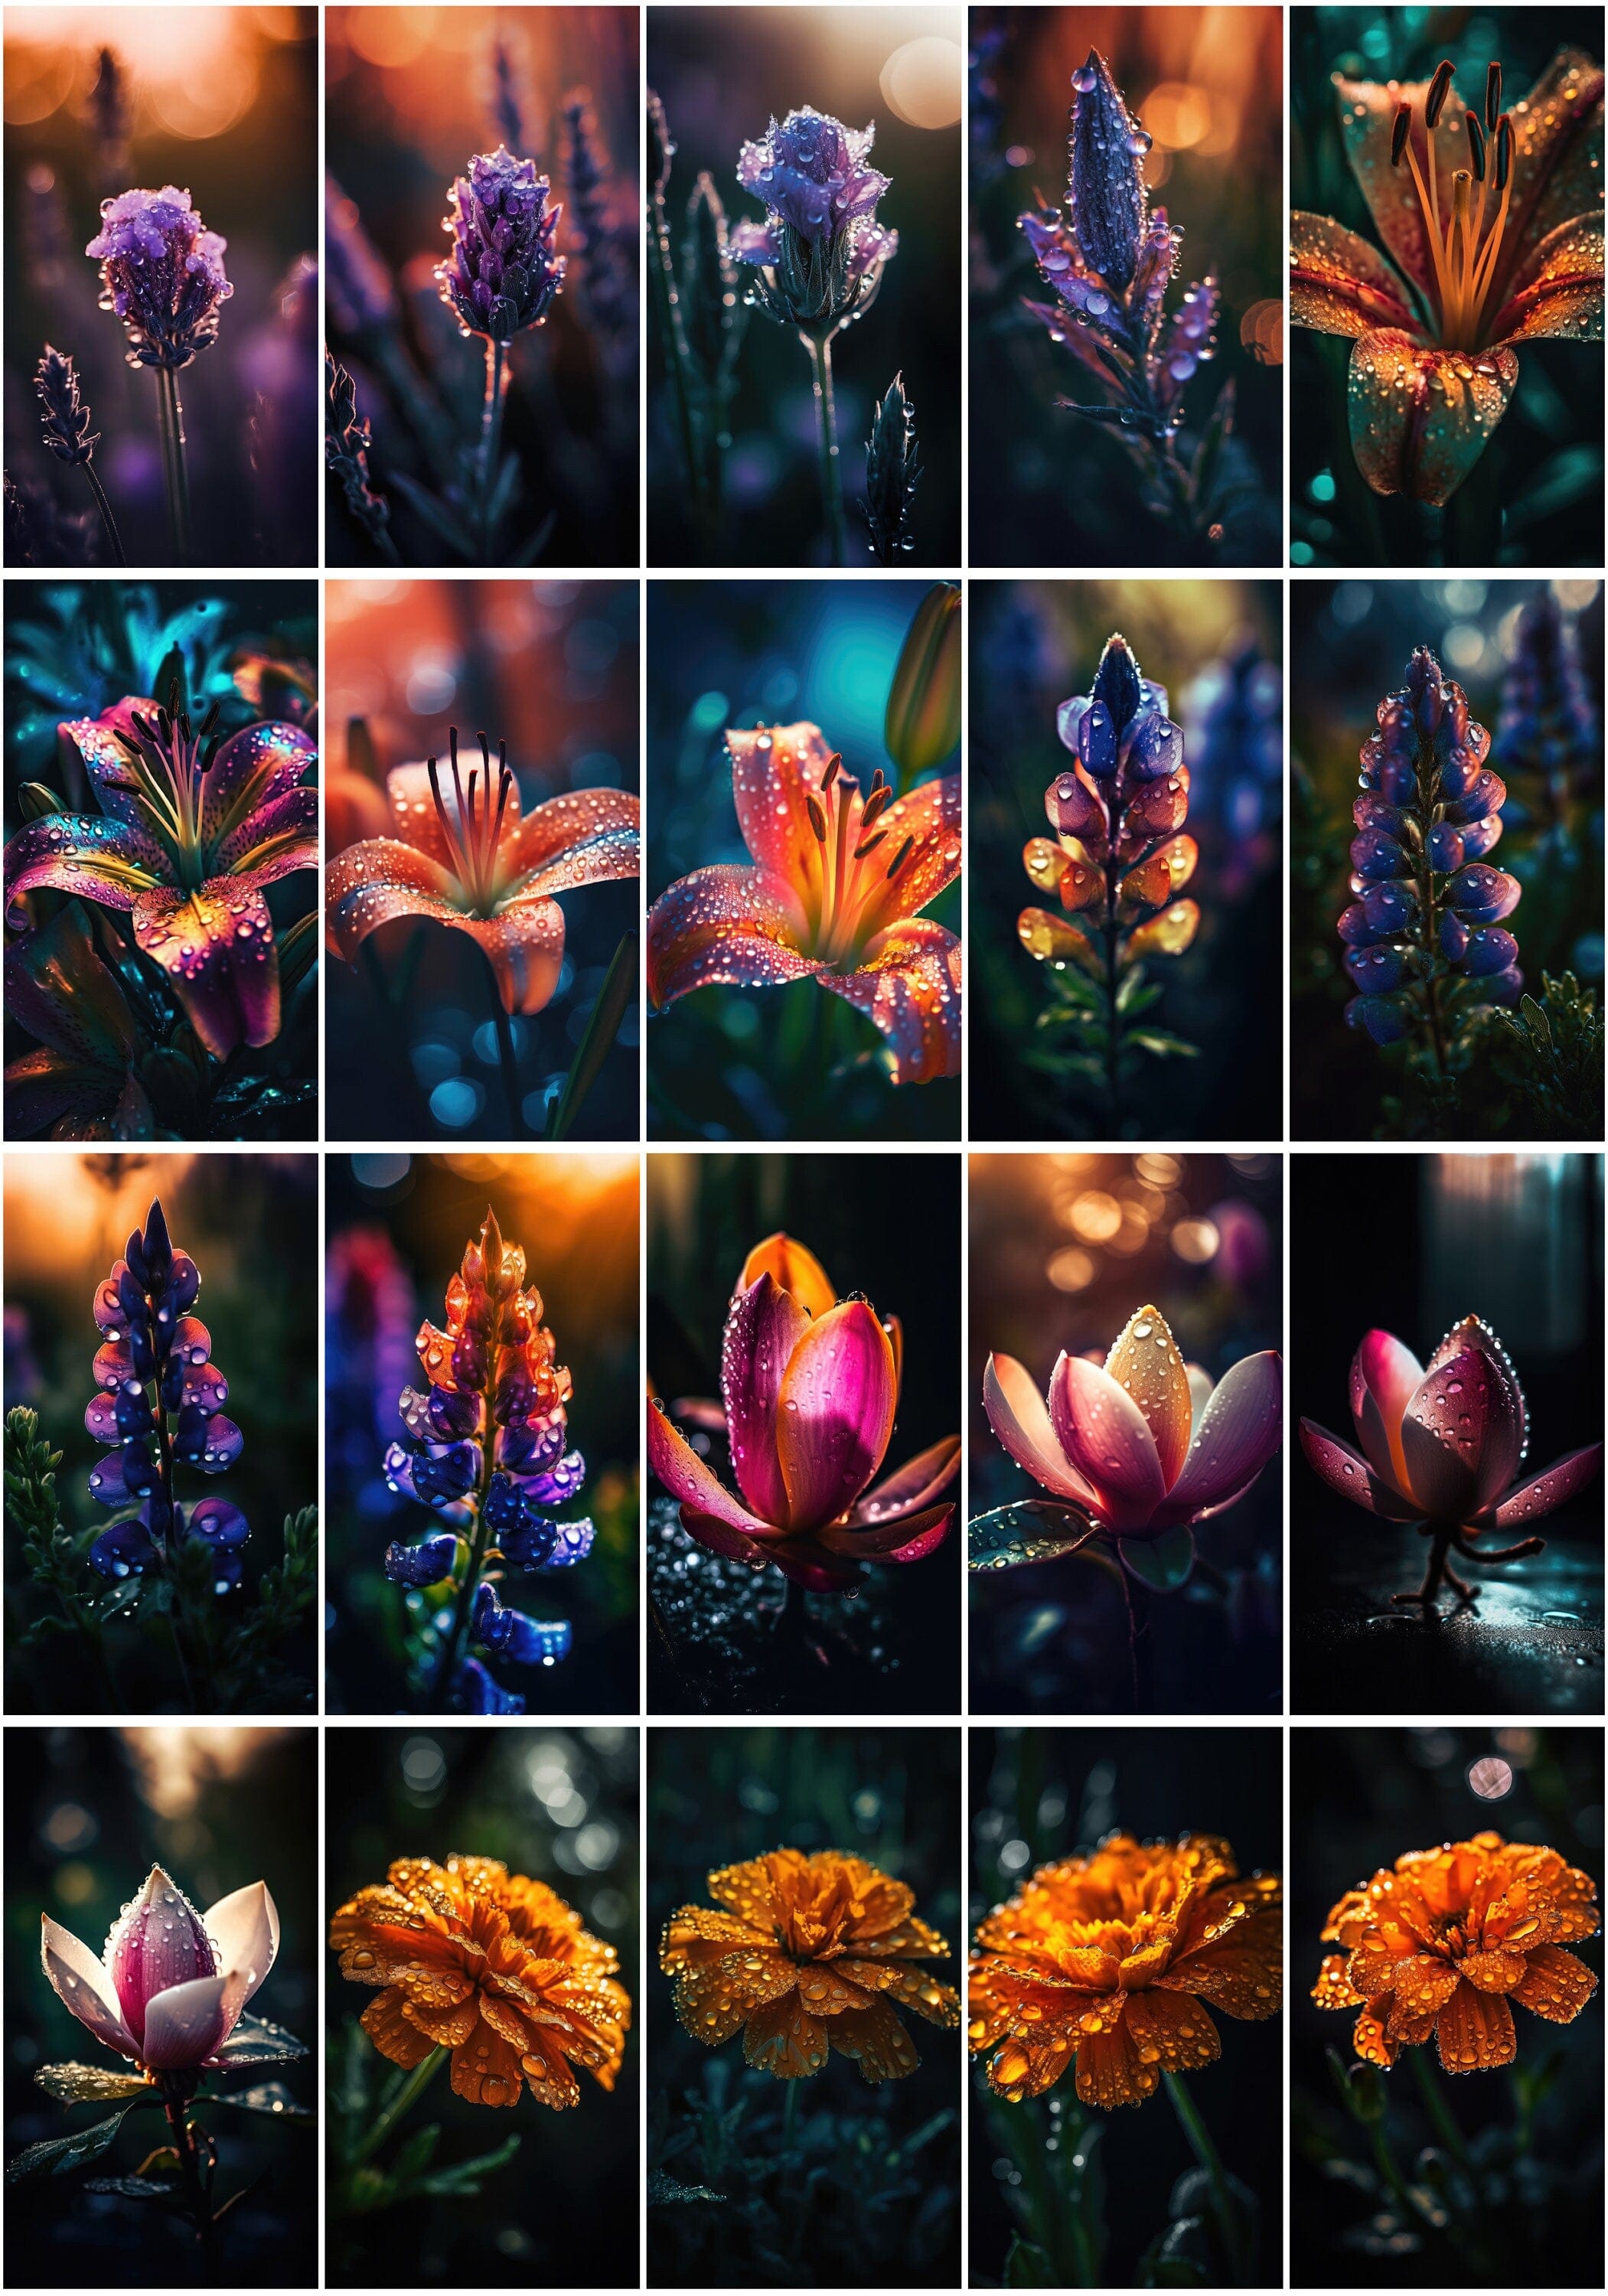 Enchanting Floral Waterdrop Images Bundle – 190 High-Quality Flower Photos with Delicate Waterdrop Digital Download Sumobundle